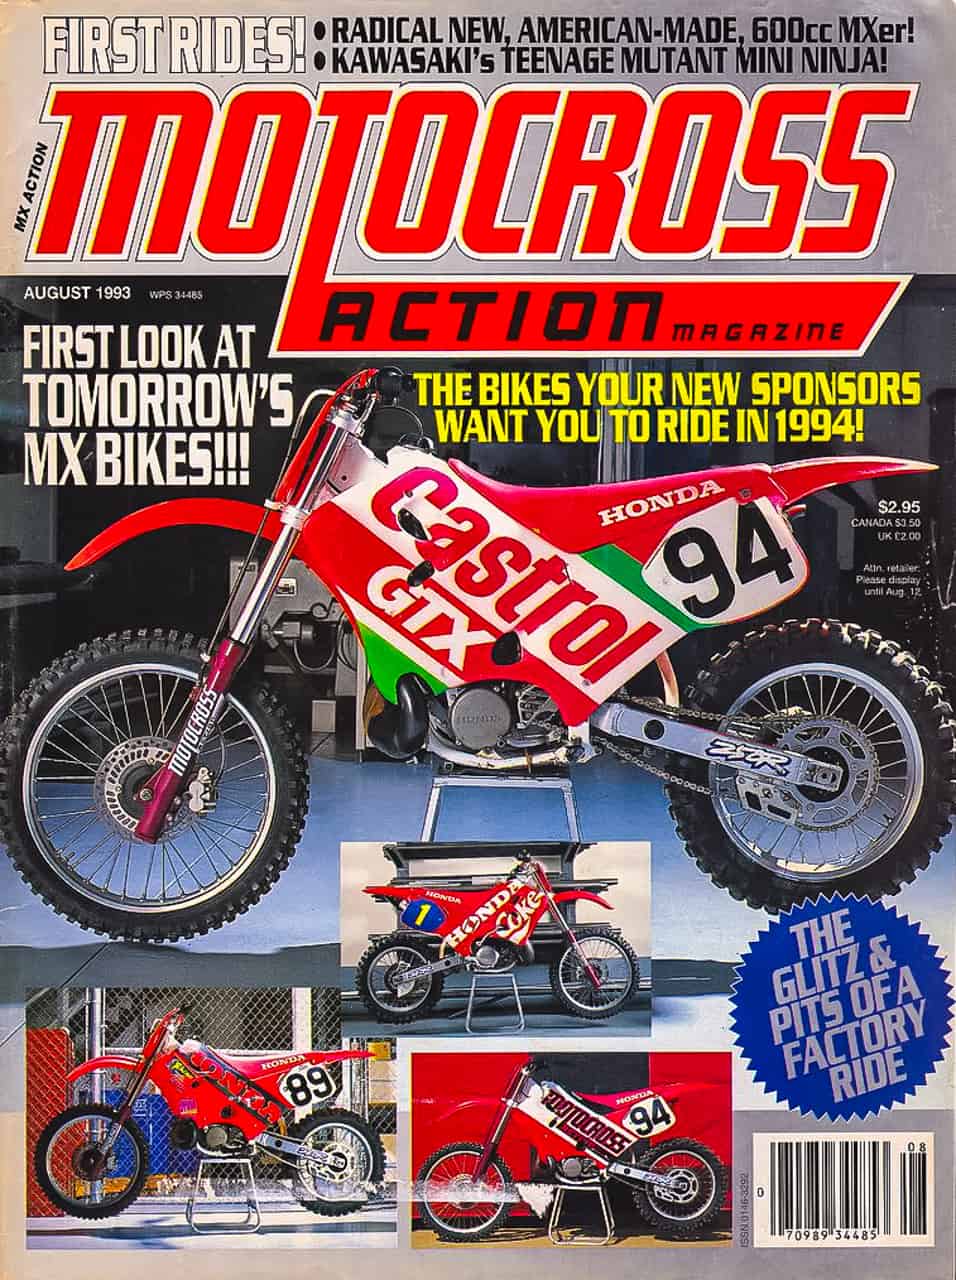 Portada de la edición de agosto de 1993 de MXA